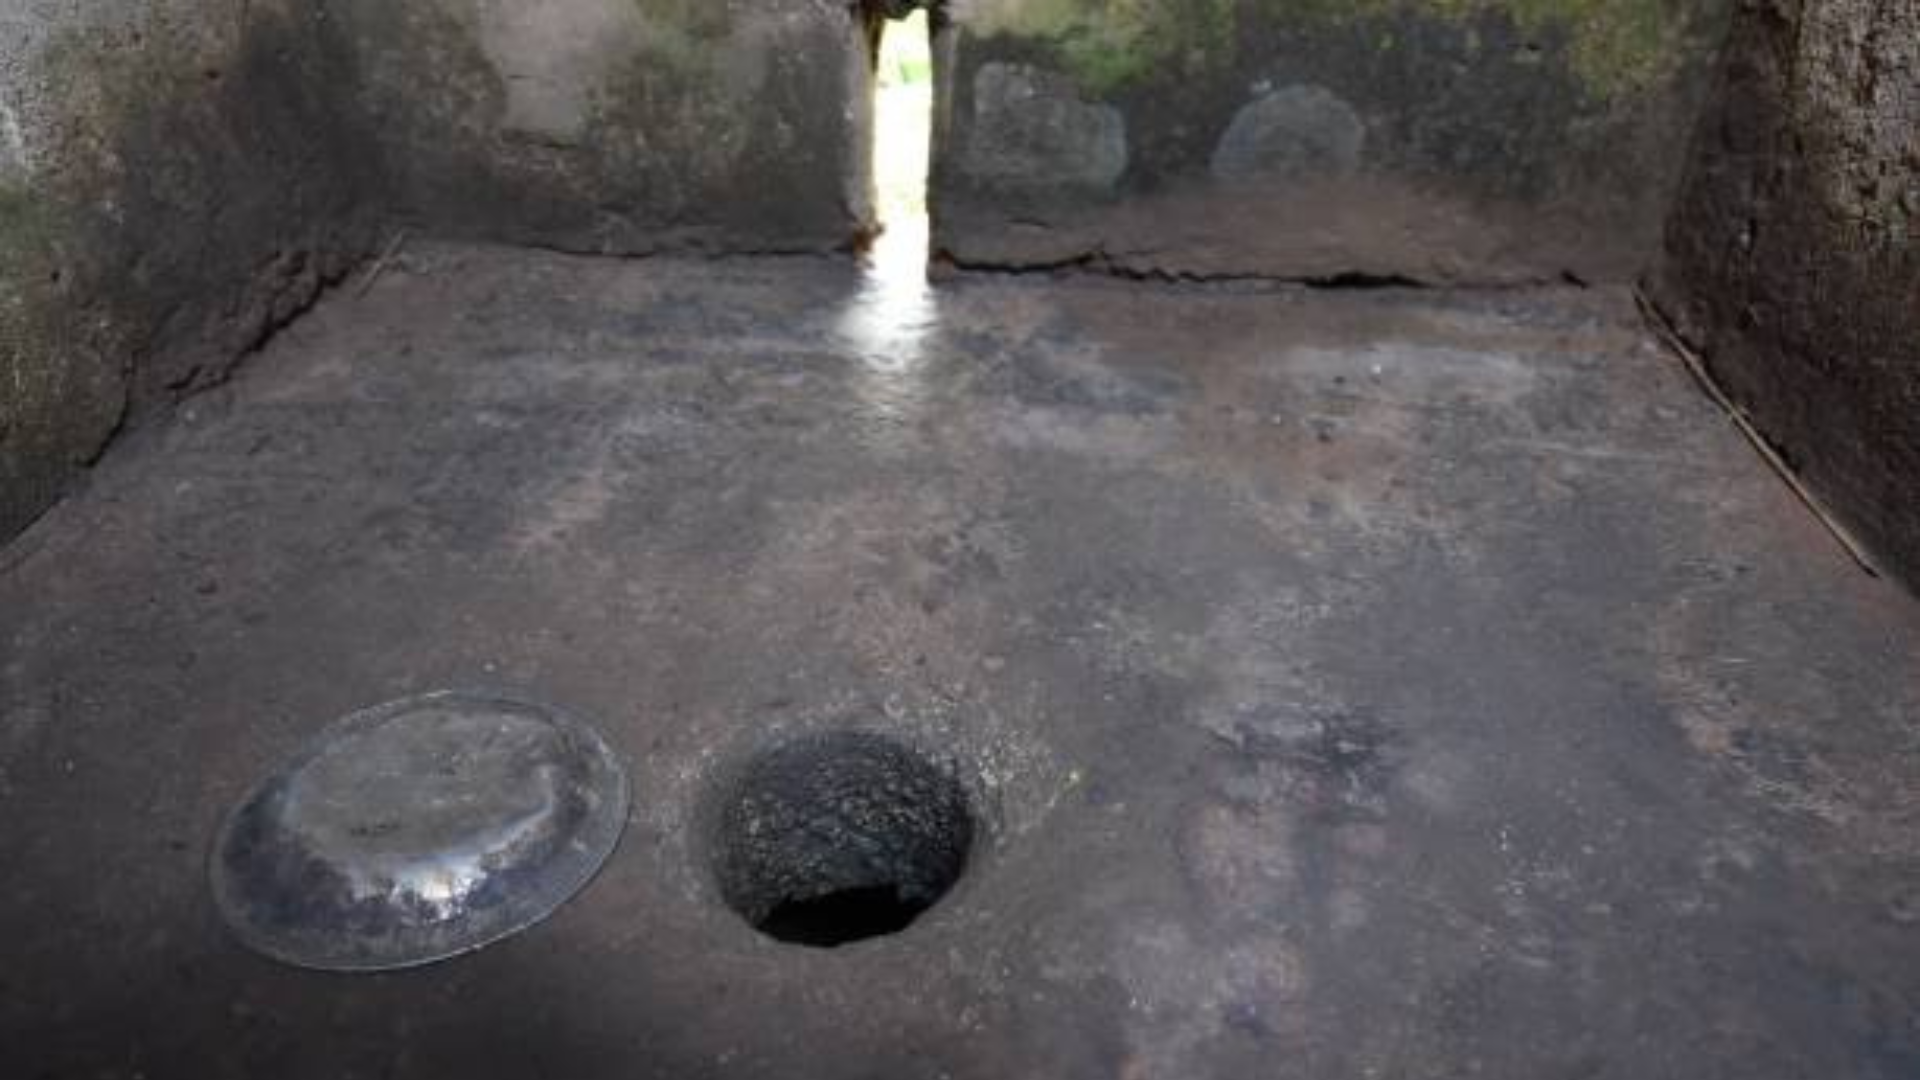 For 2018, authorities bin free six pickin wey trap inside pit latrine